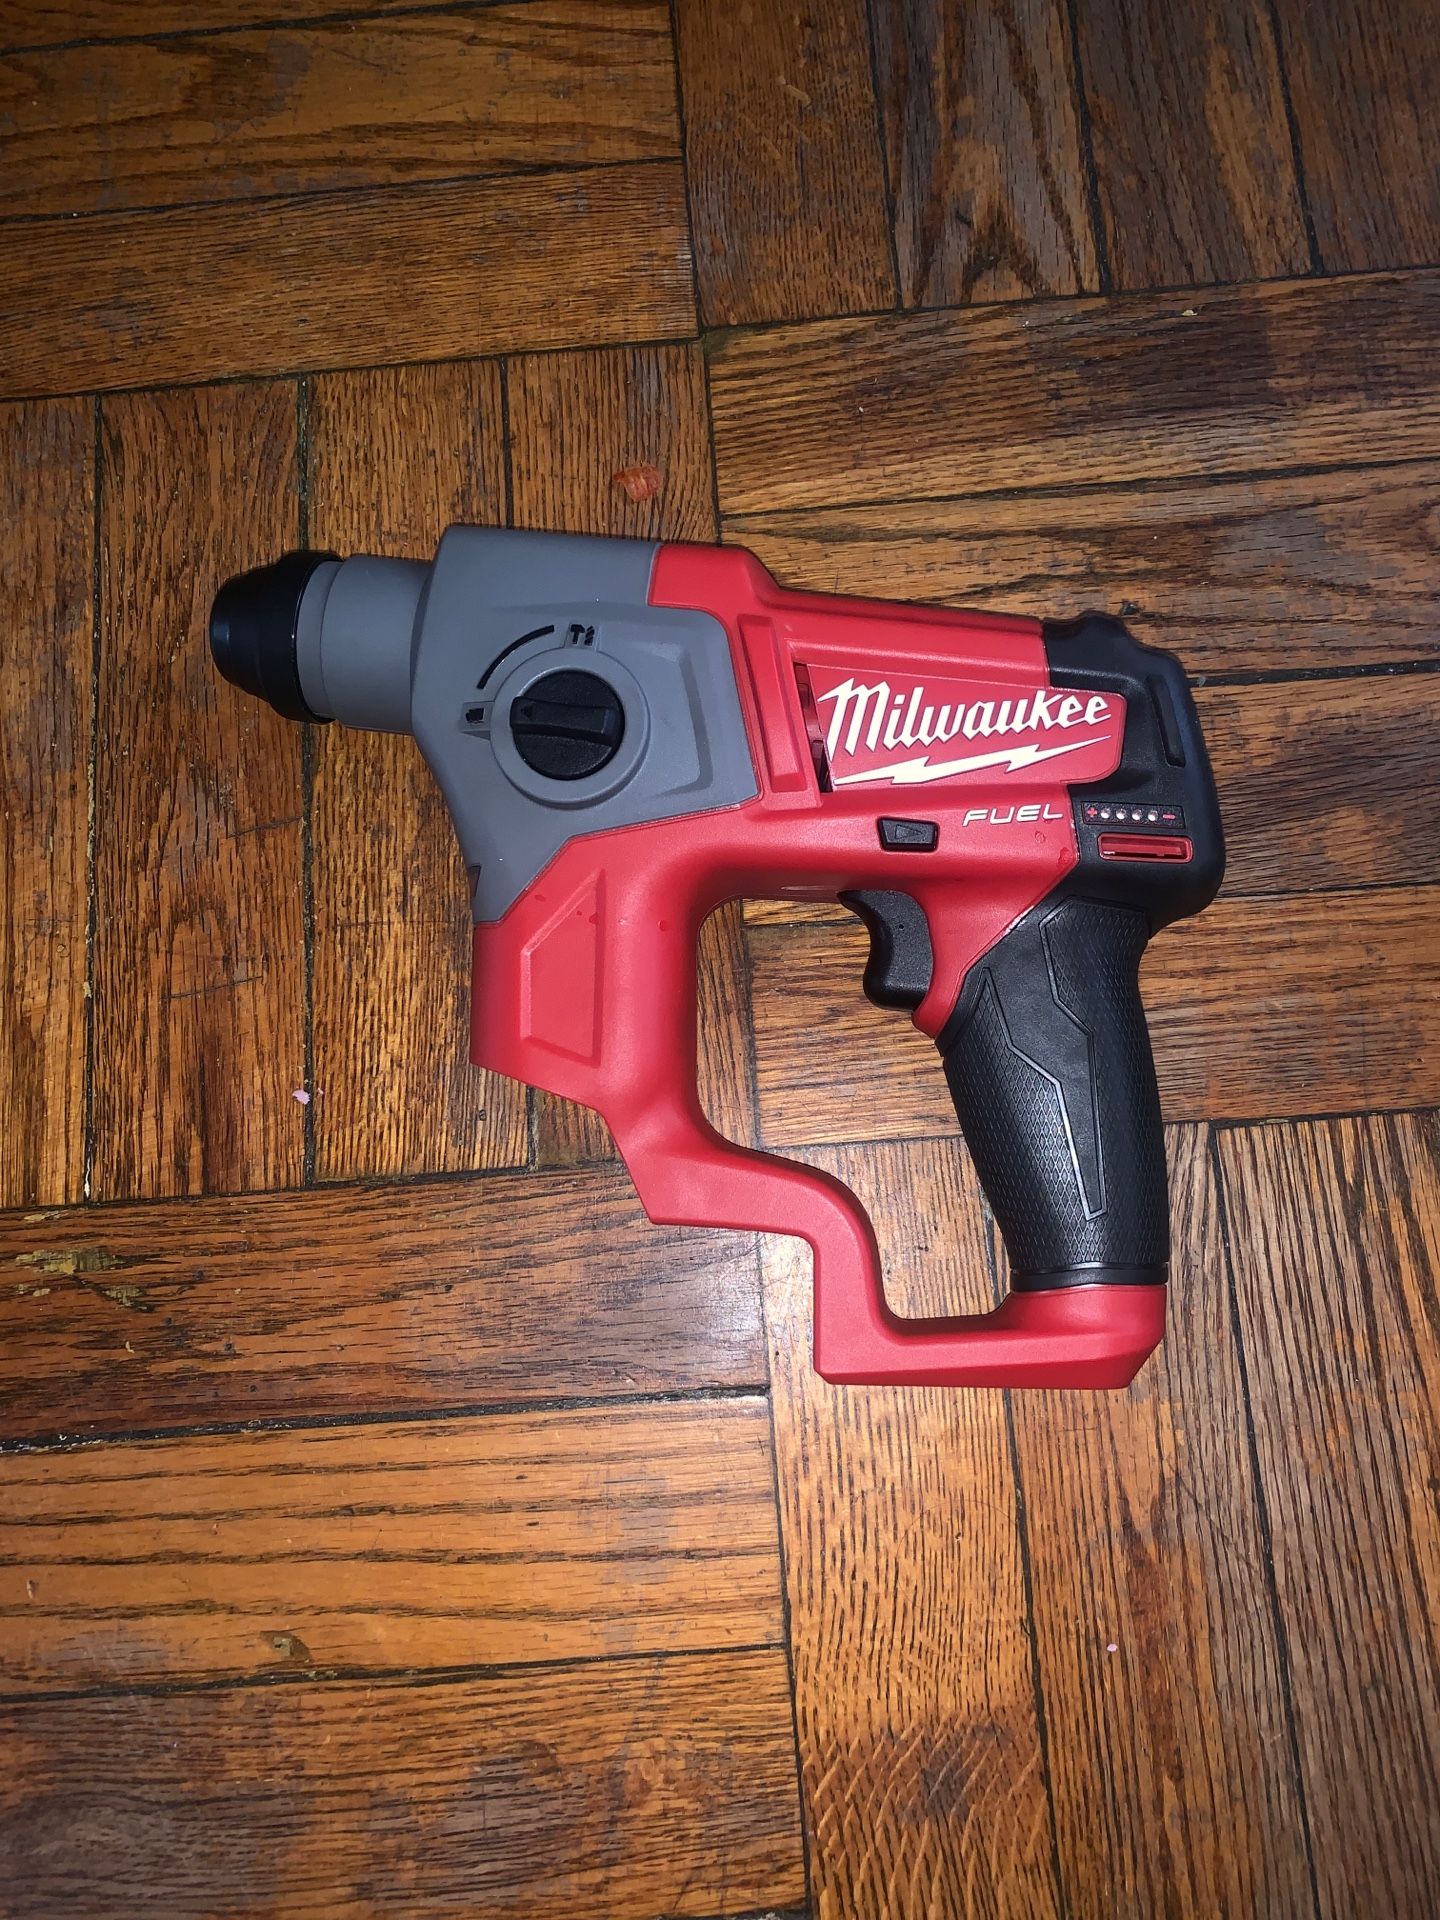 Milwaukee sds plus rotary hammer drill 5/8 size (brand new)